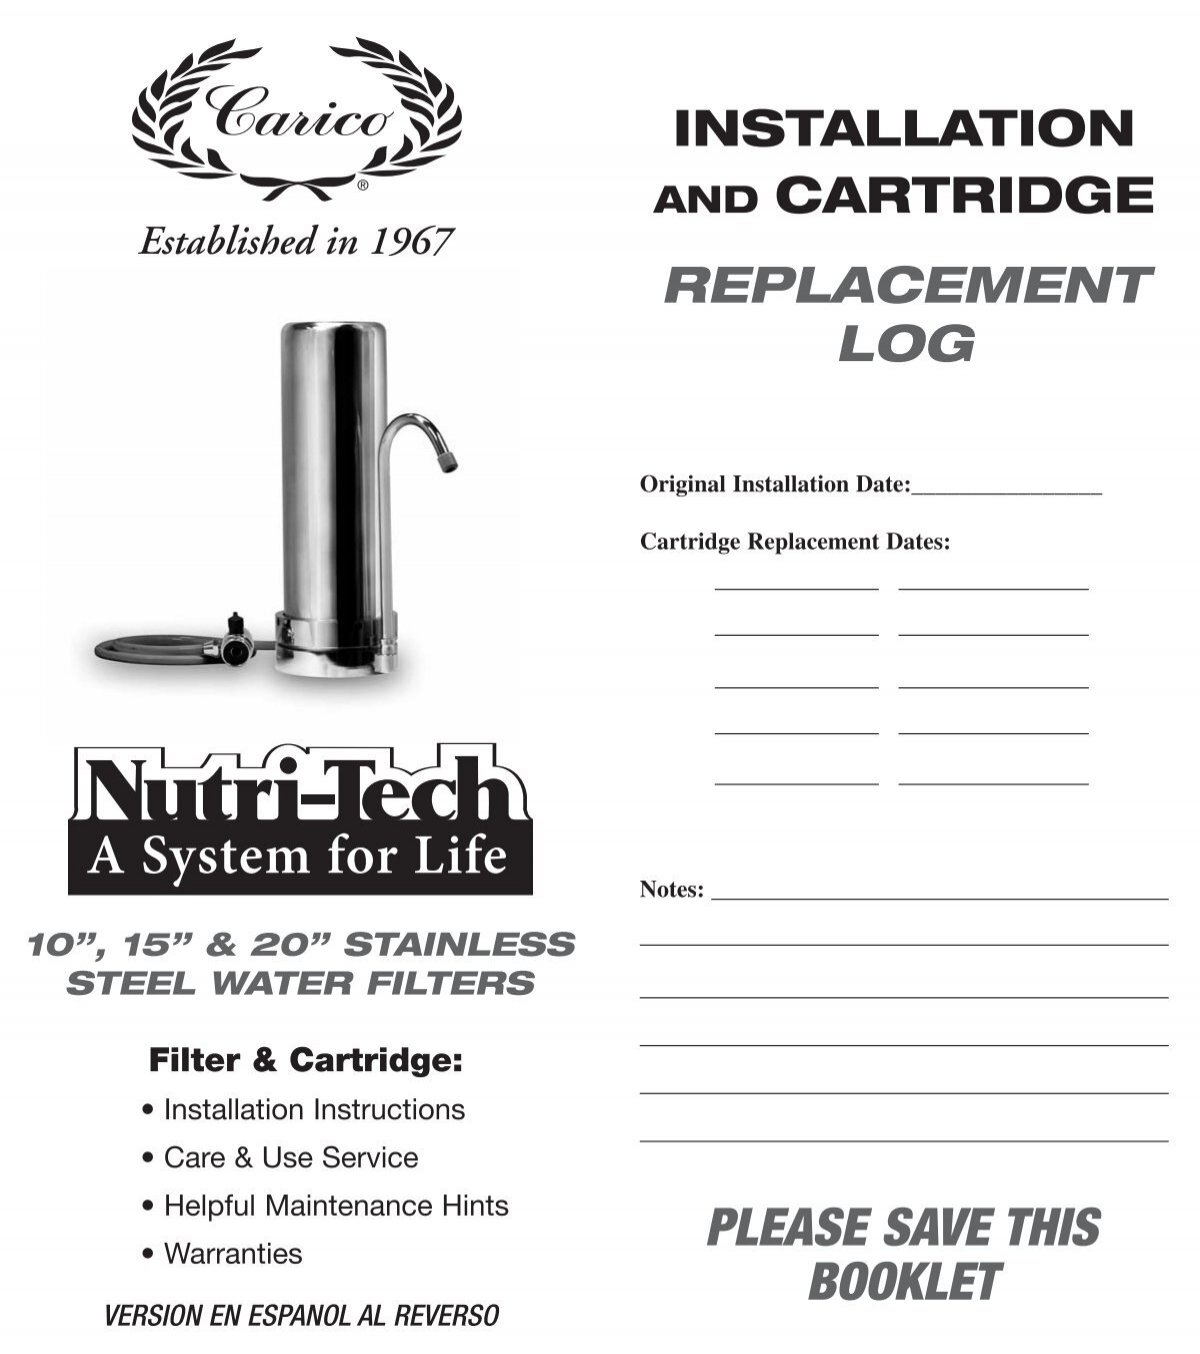 SS Water Filter Manual - Carico International, Inc.